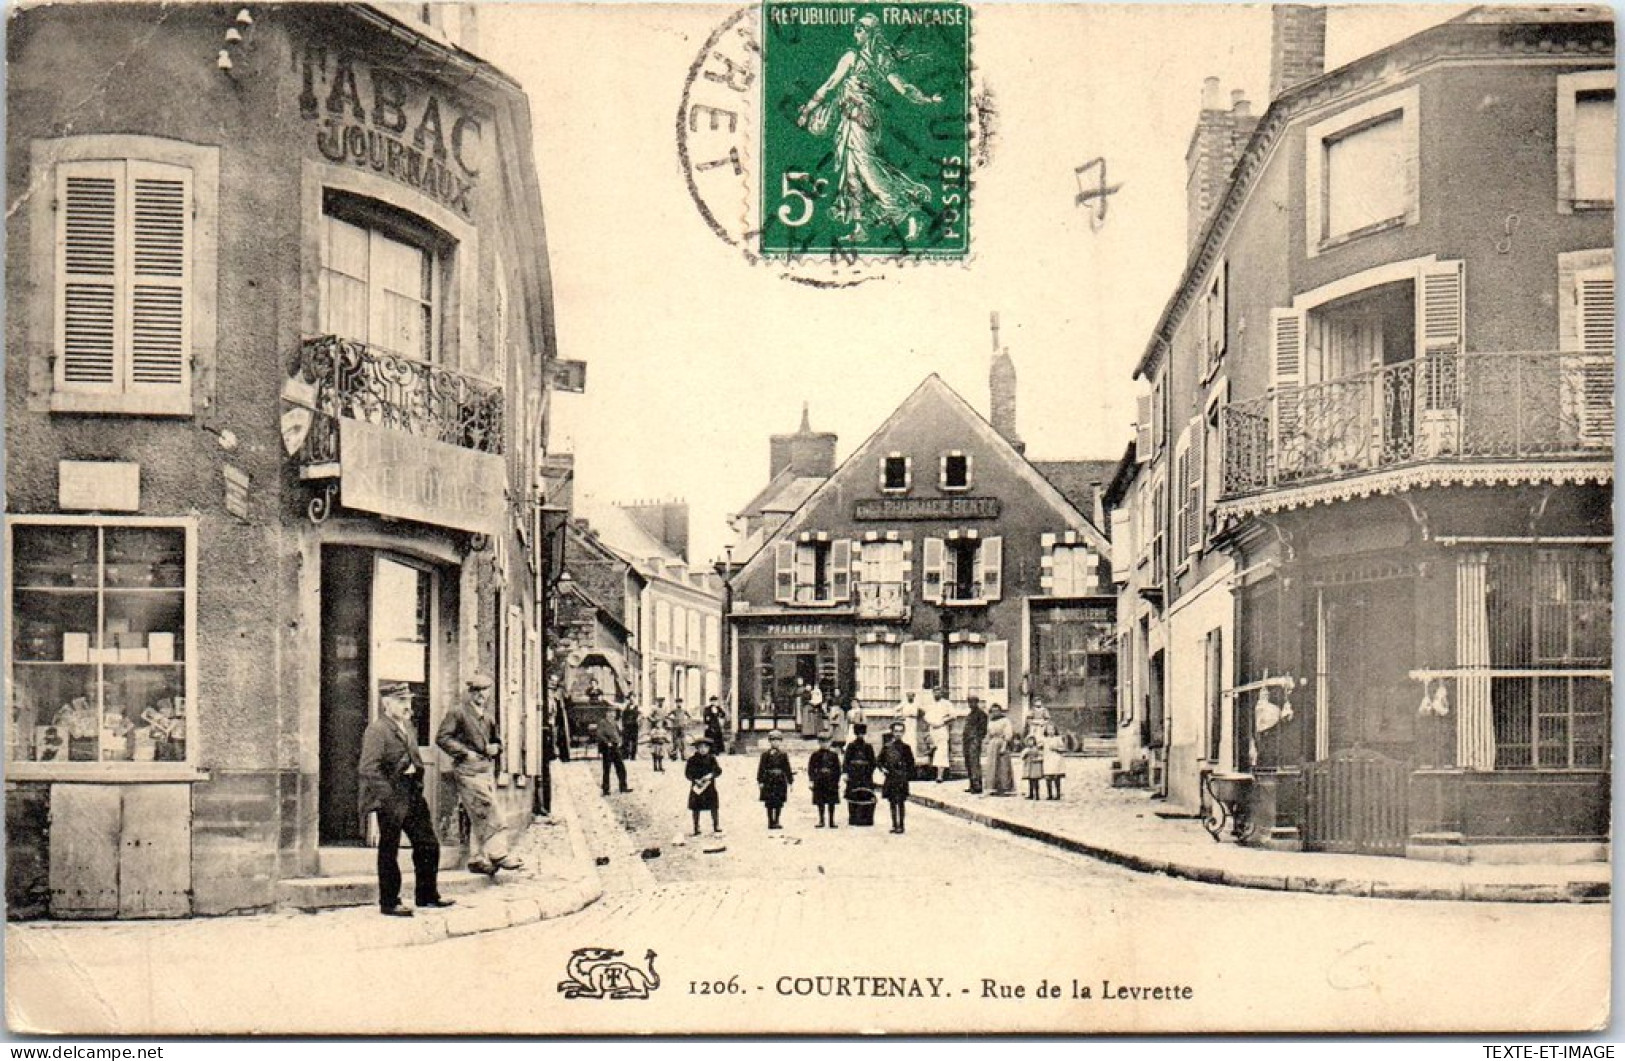 45 COURTENAY - La Rue De La Leuvrette.  - Courtenay